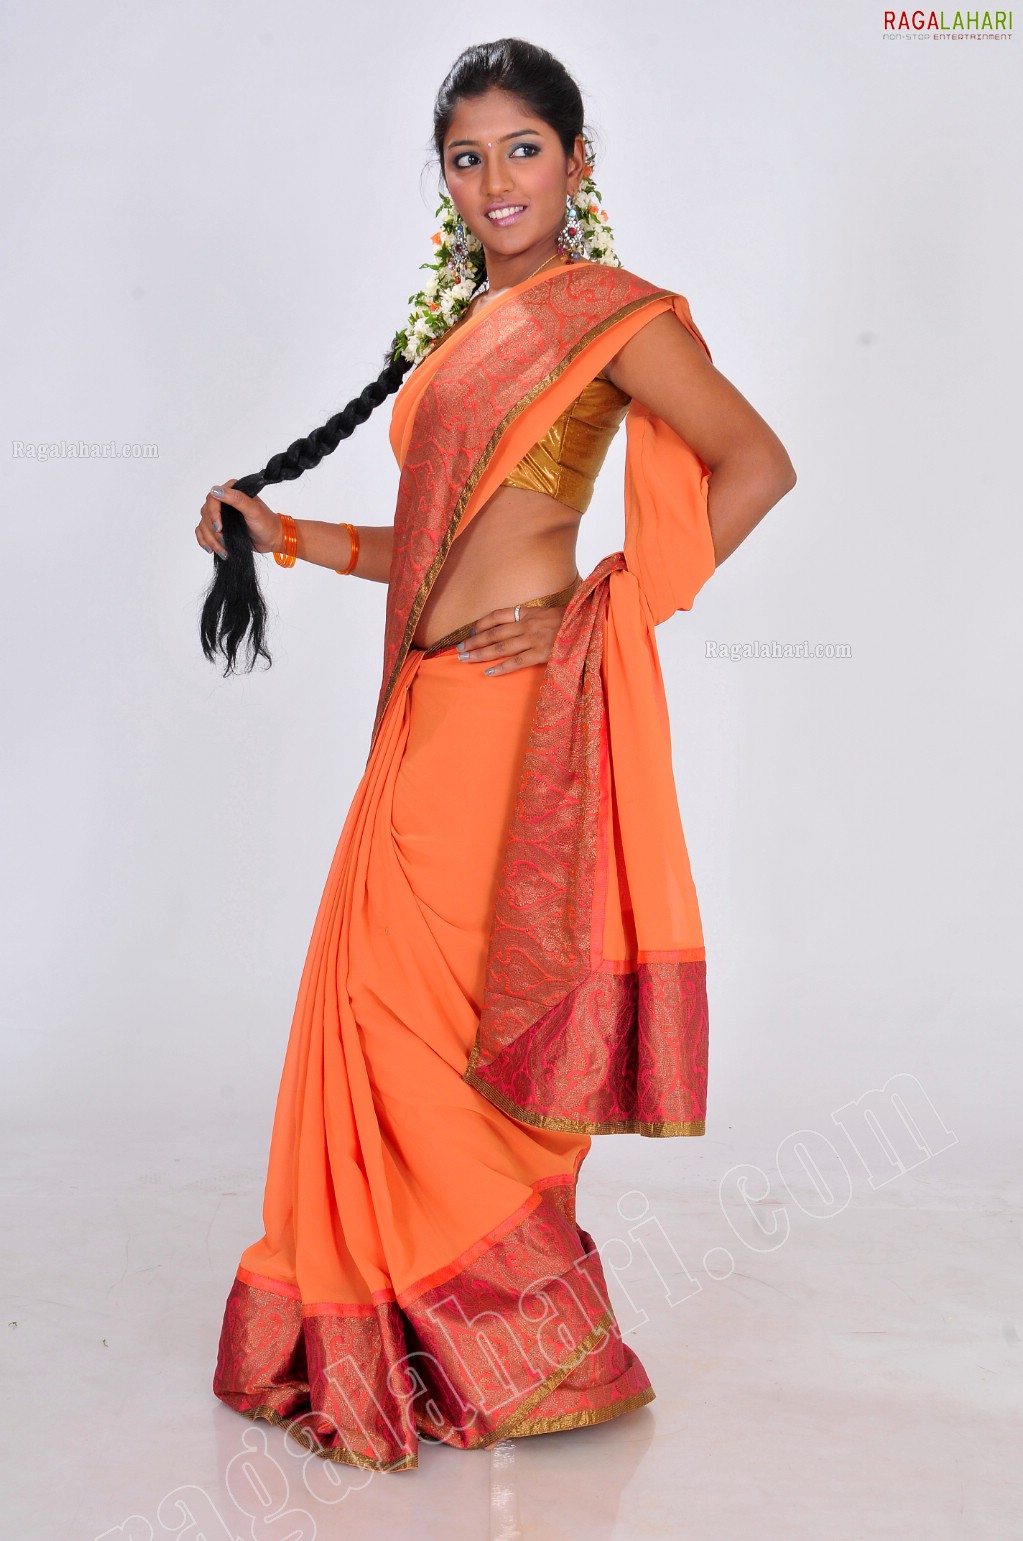 Eesha Rebba in Traditional Saree Exclusive Photo Shoot